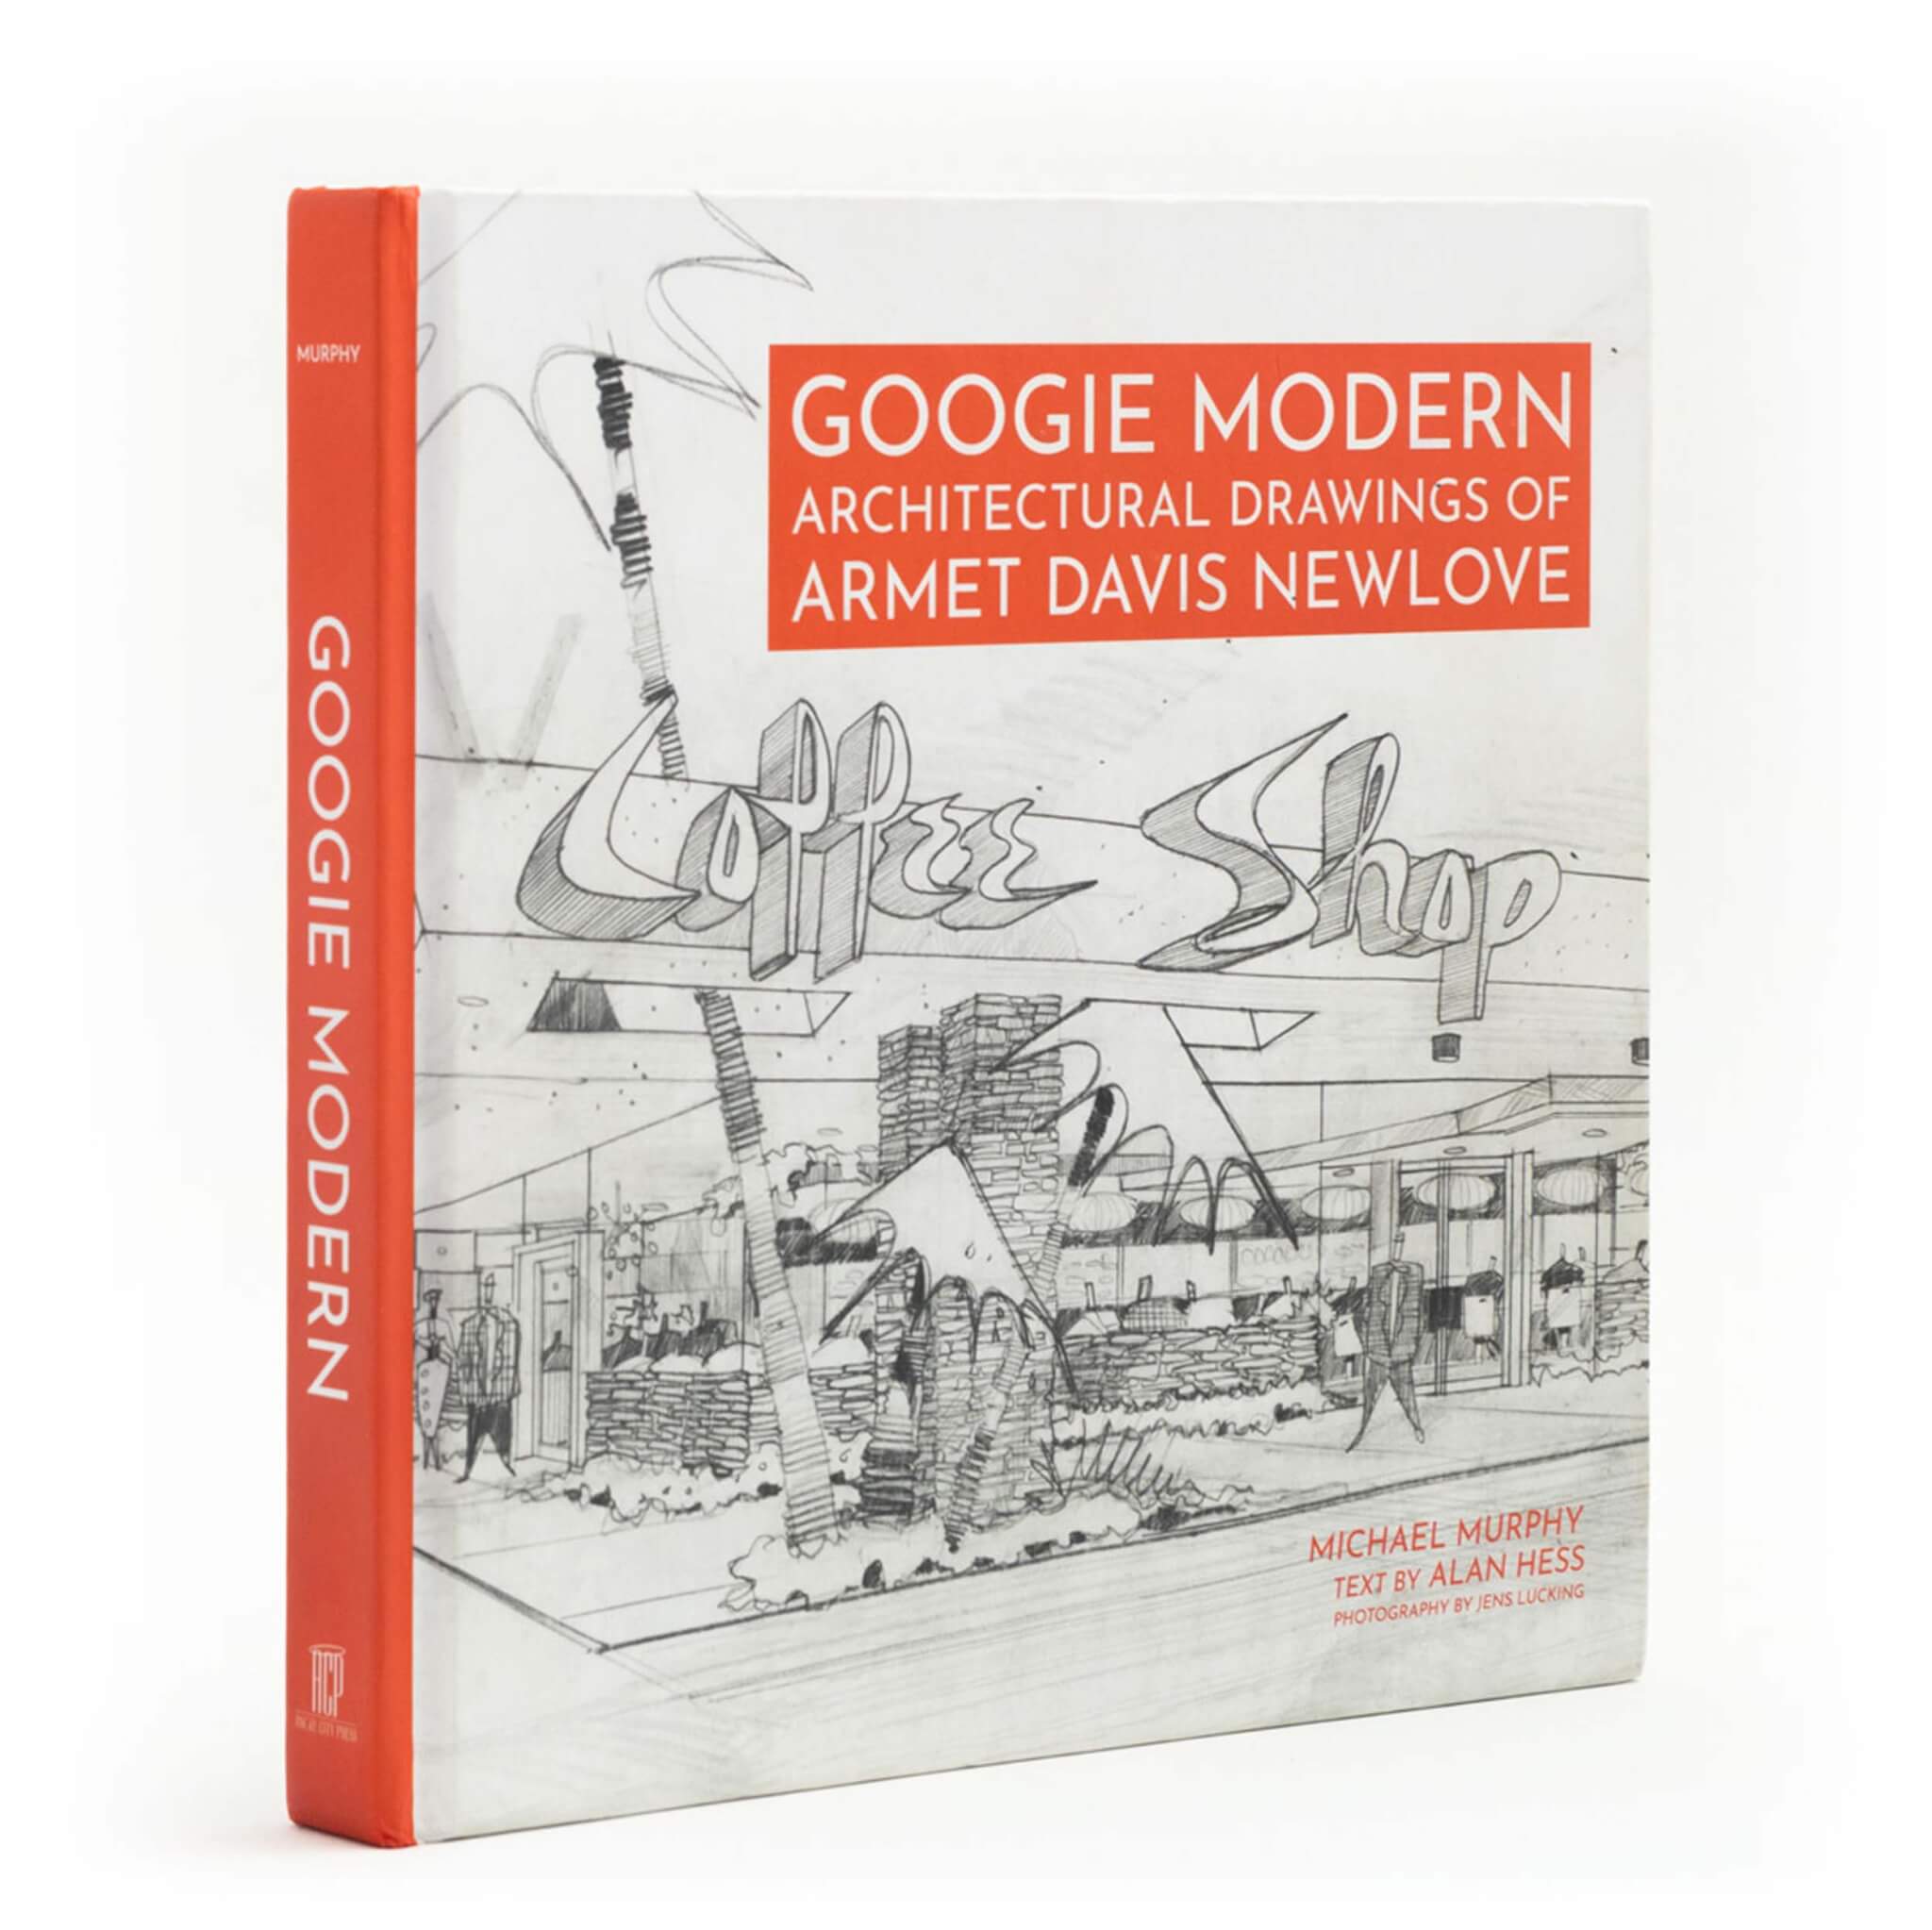 googie modern book cover